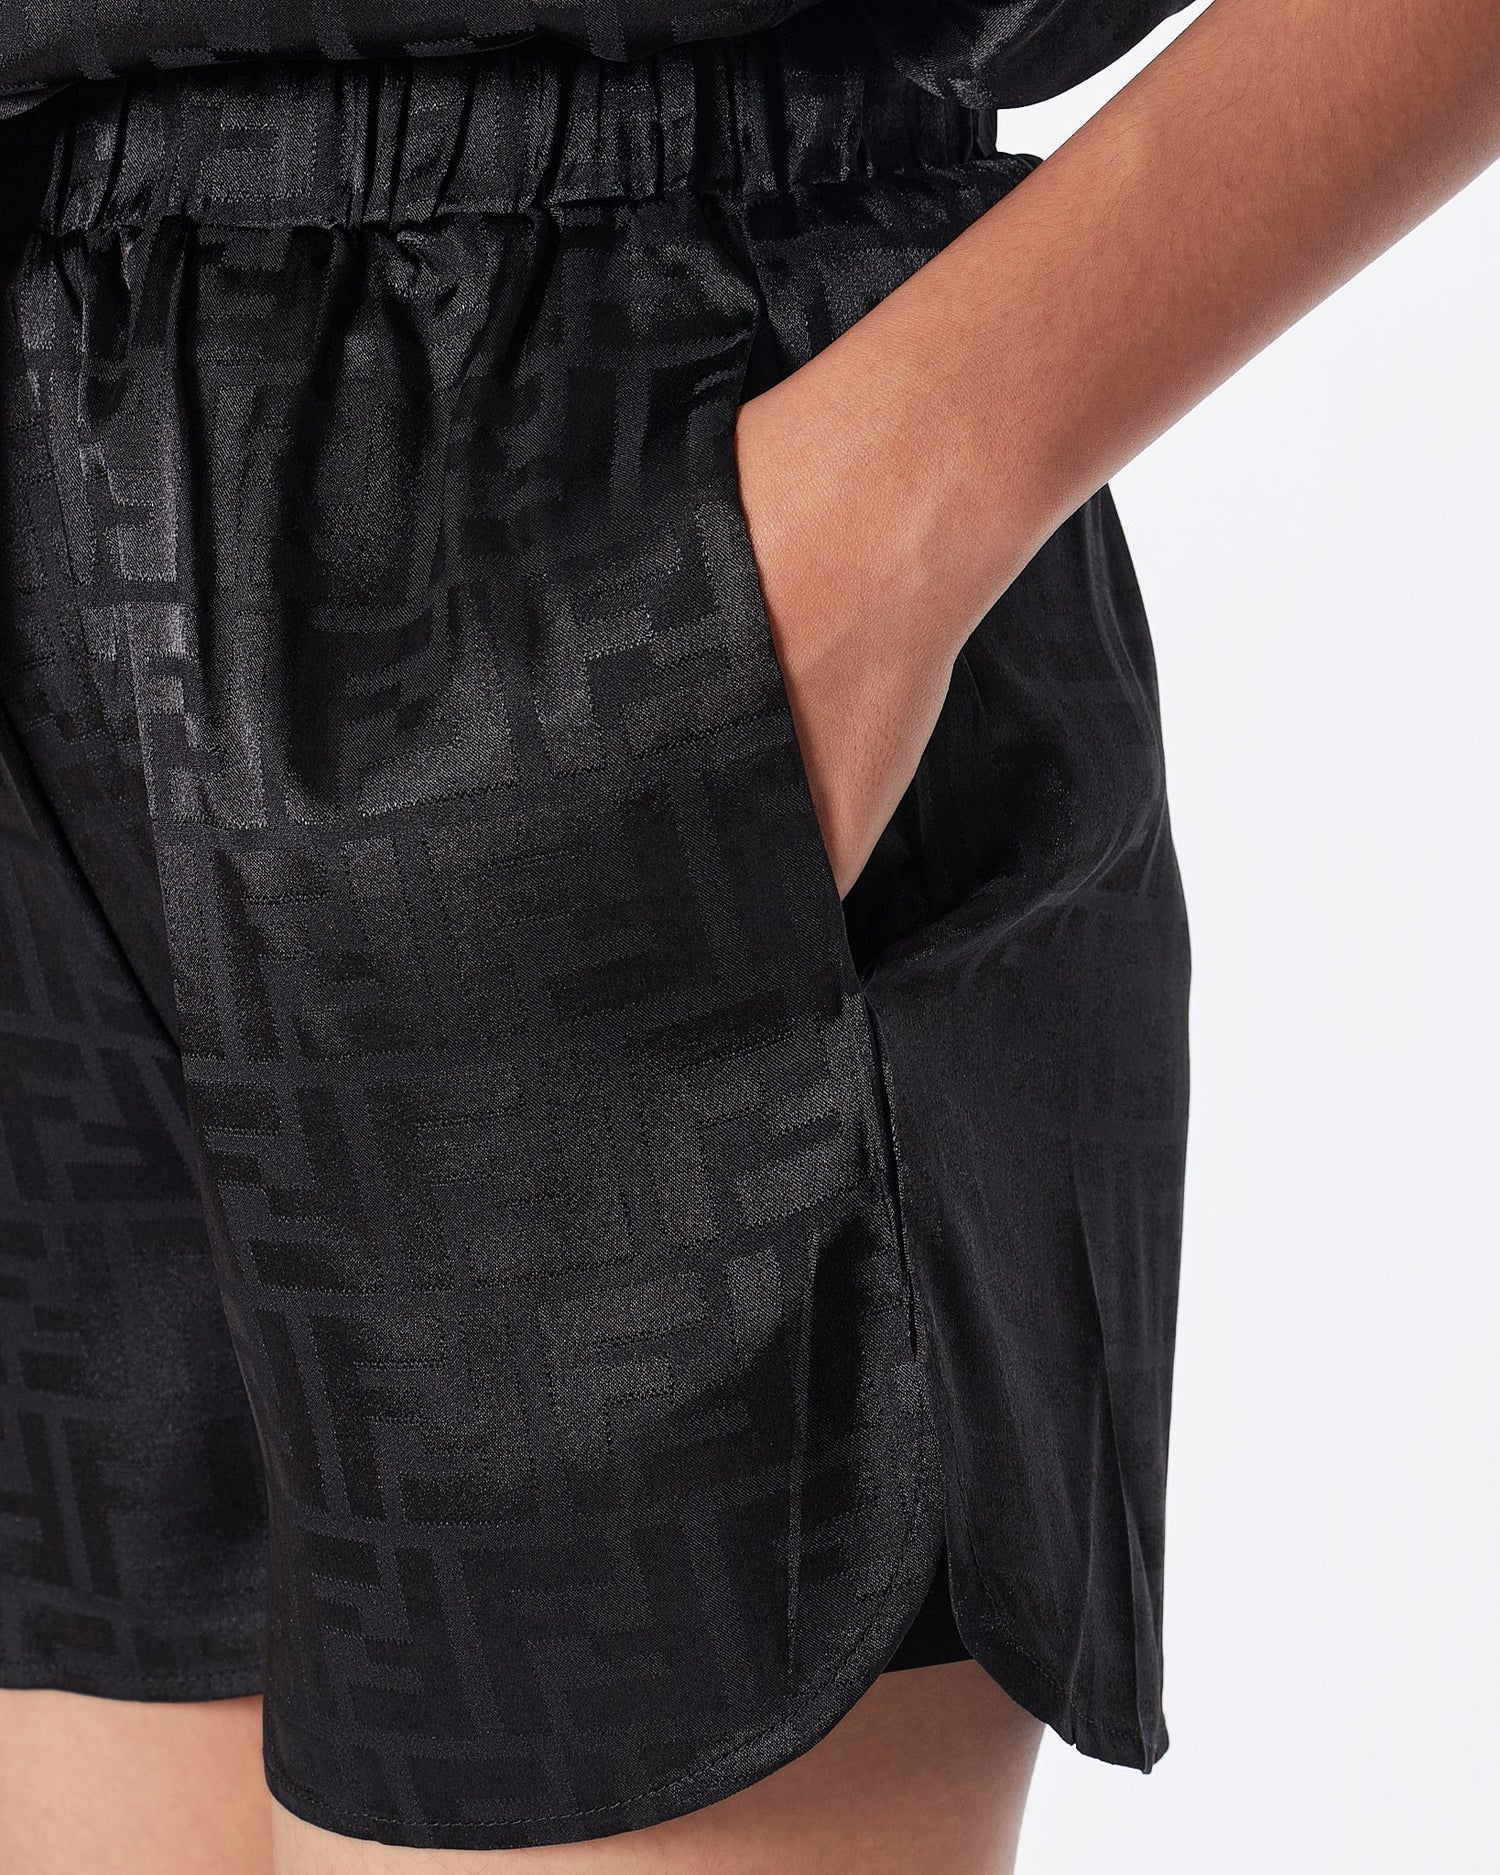 MOI OUTFIT-FF Monogram Lady Black Set Shirt + Short 2pcs 79.90